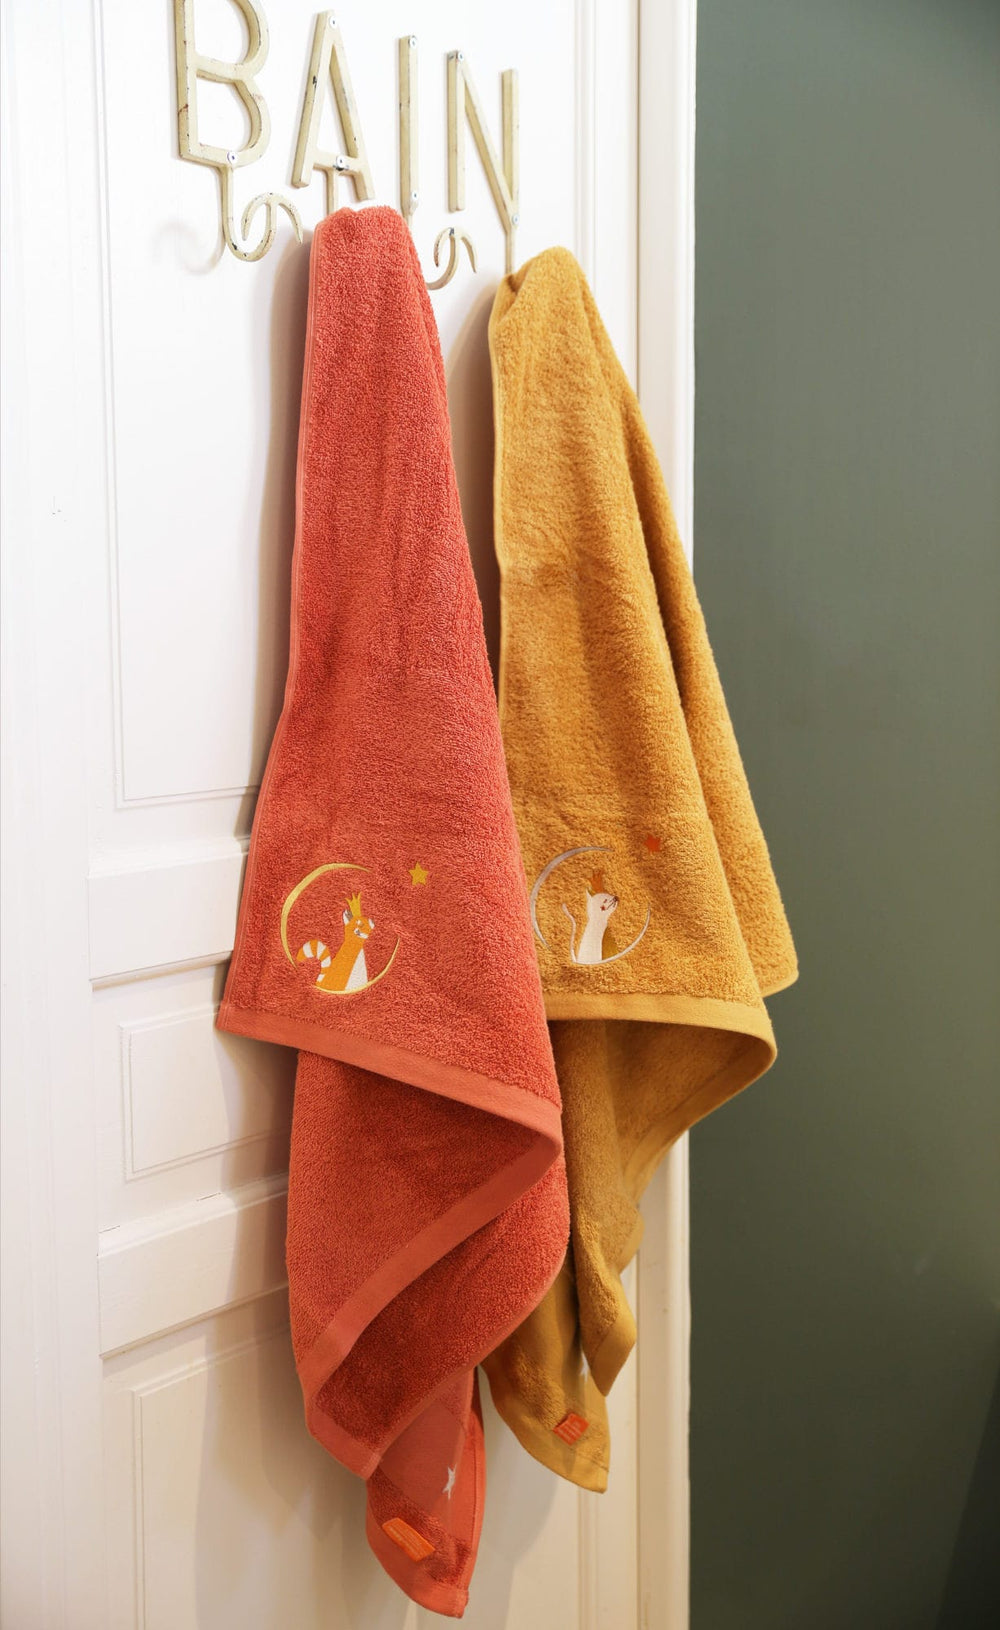 Asciugamano personalizzabile 70 x 140 Caramel, Oiseau Bateau